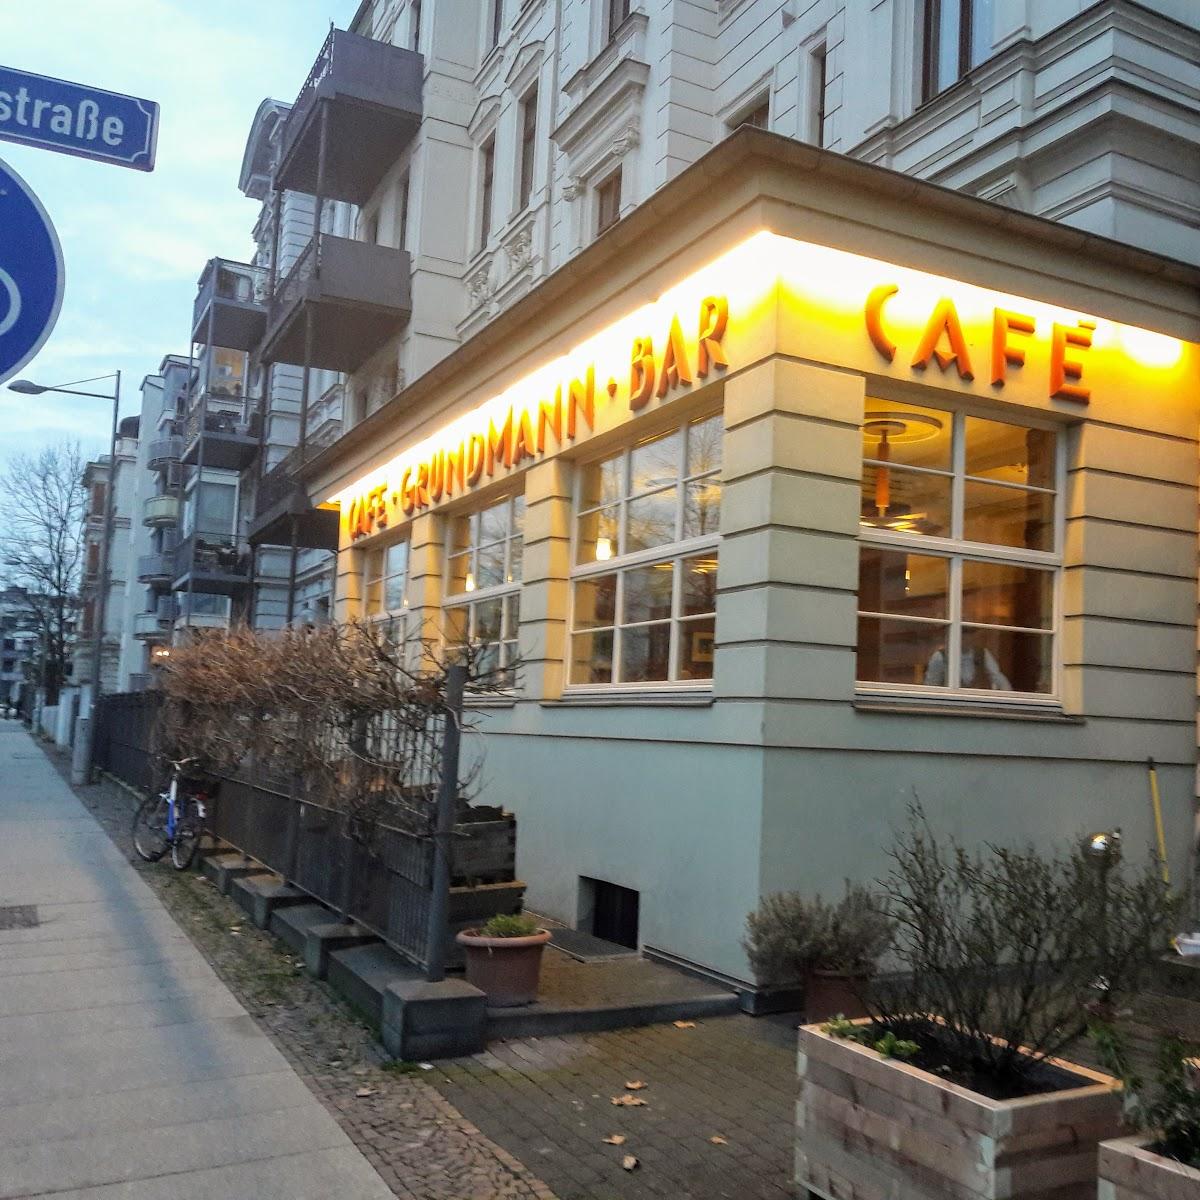 Restaurant "Café Grundmann" in Leipzig